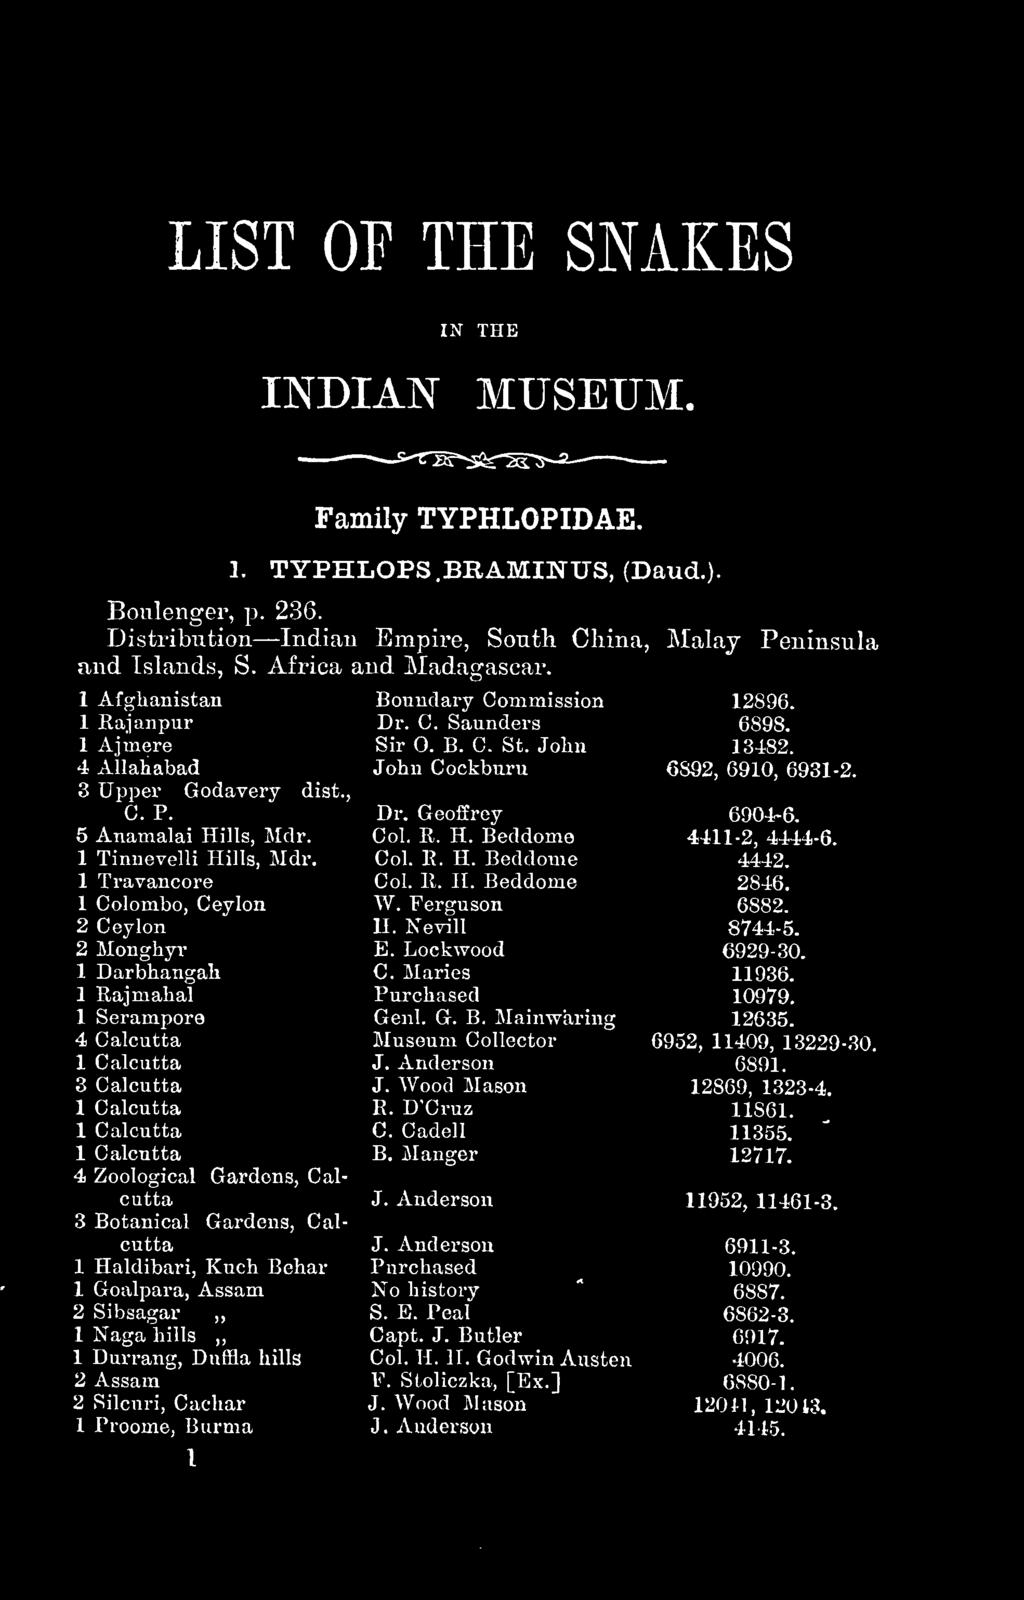 Distribution Indian Empire, Soutli China, Malay